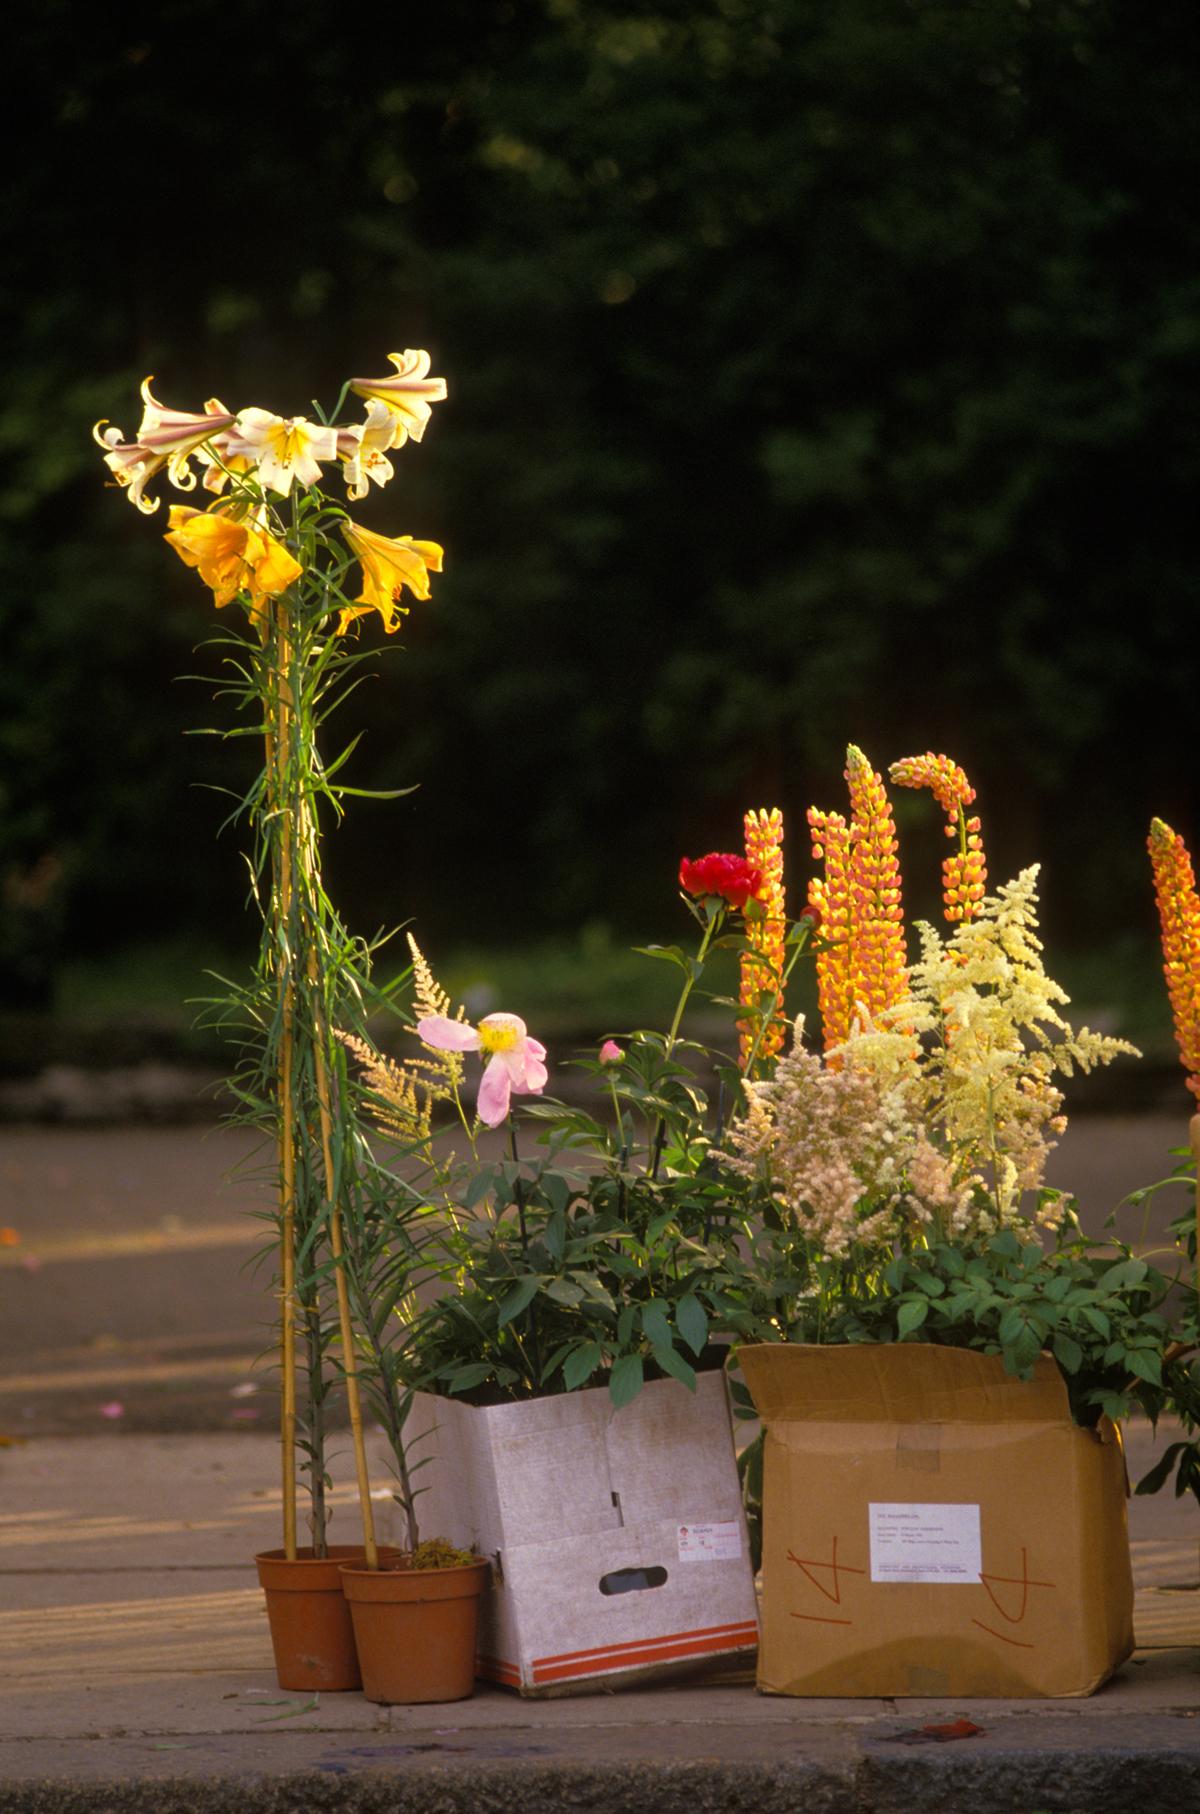 Still-Life Photograph Homer Sykes  - Last Day Chelsea Flower Show Angleterre - impression surdimensionne signe en dition limite